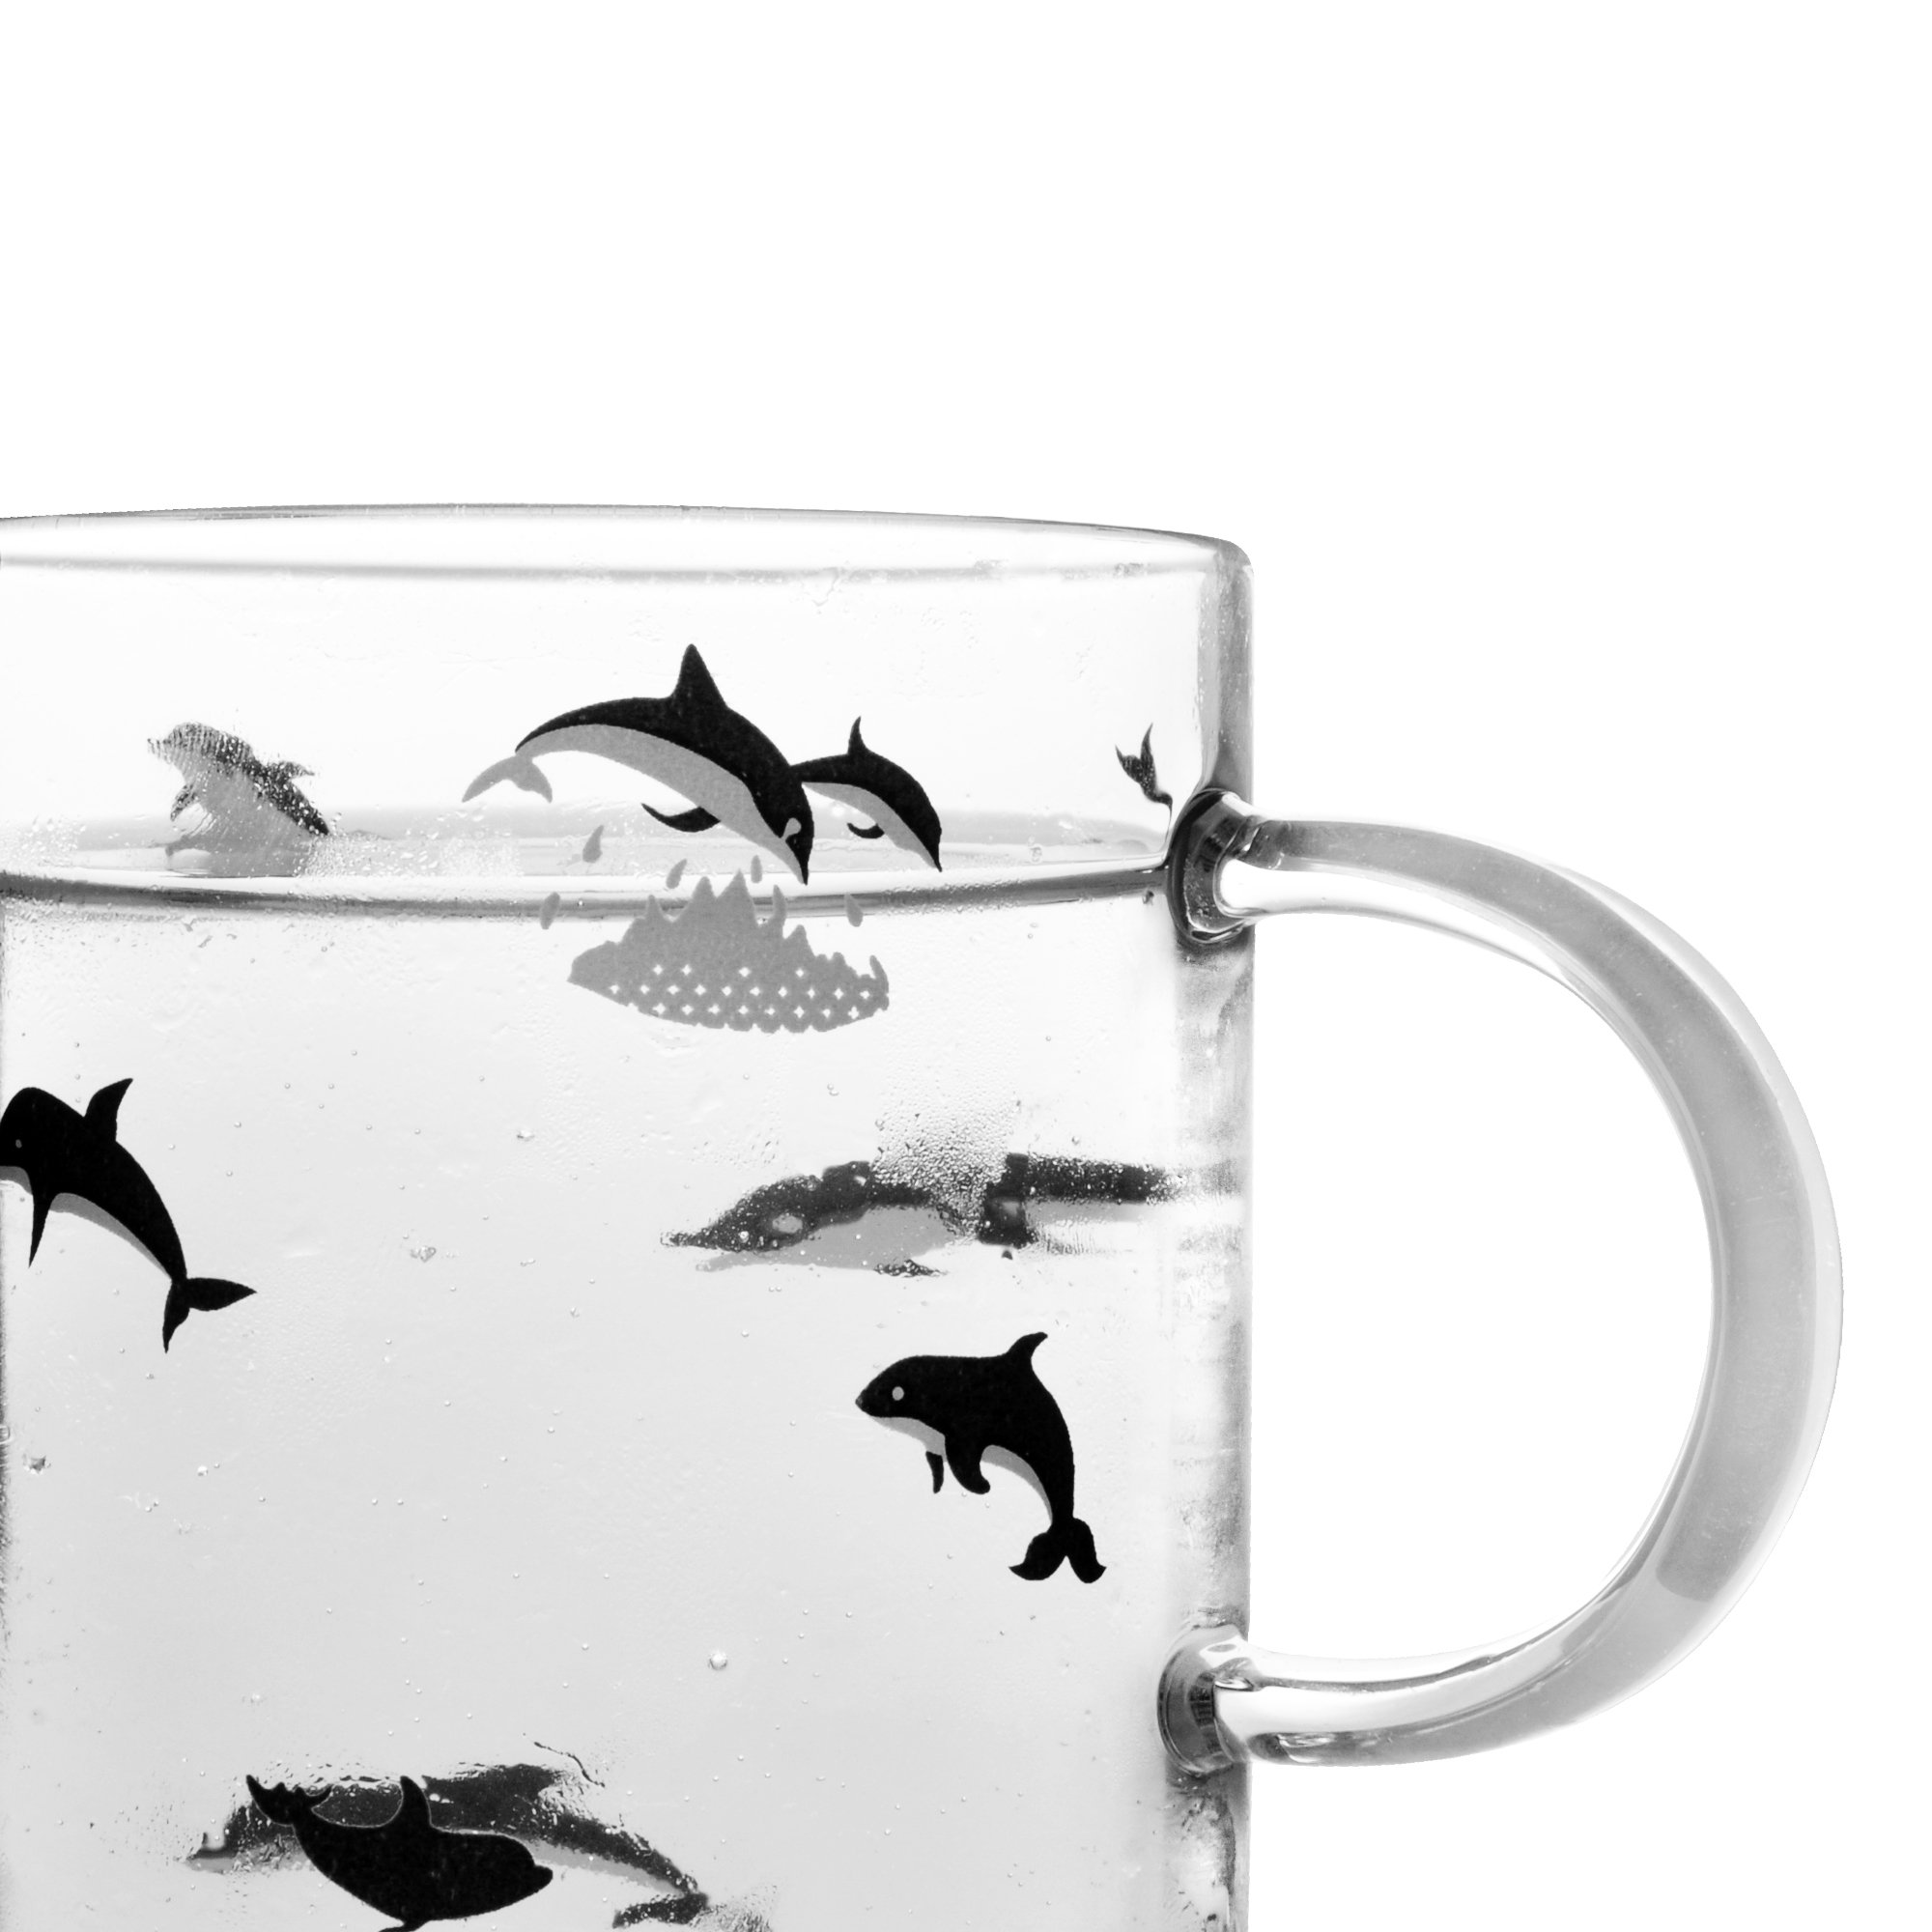 ELITEA Glass Mug with Handle Clear Cute Coffee Mugs Tea Cup with Dolphin Print 16.3oz